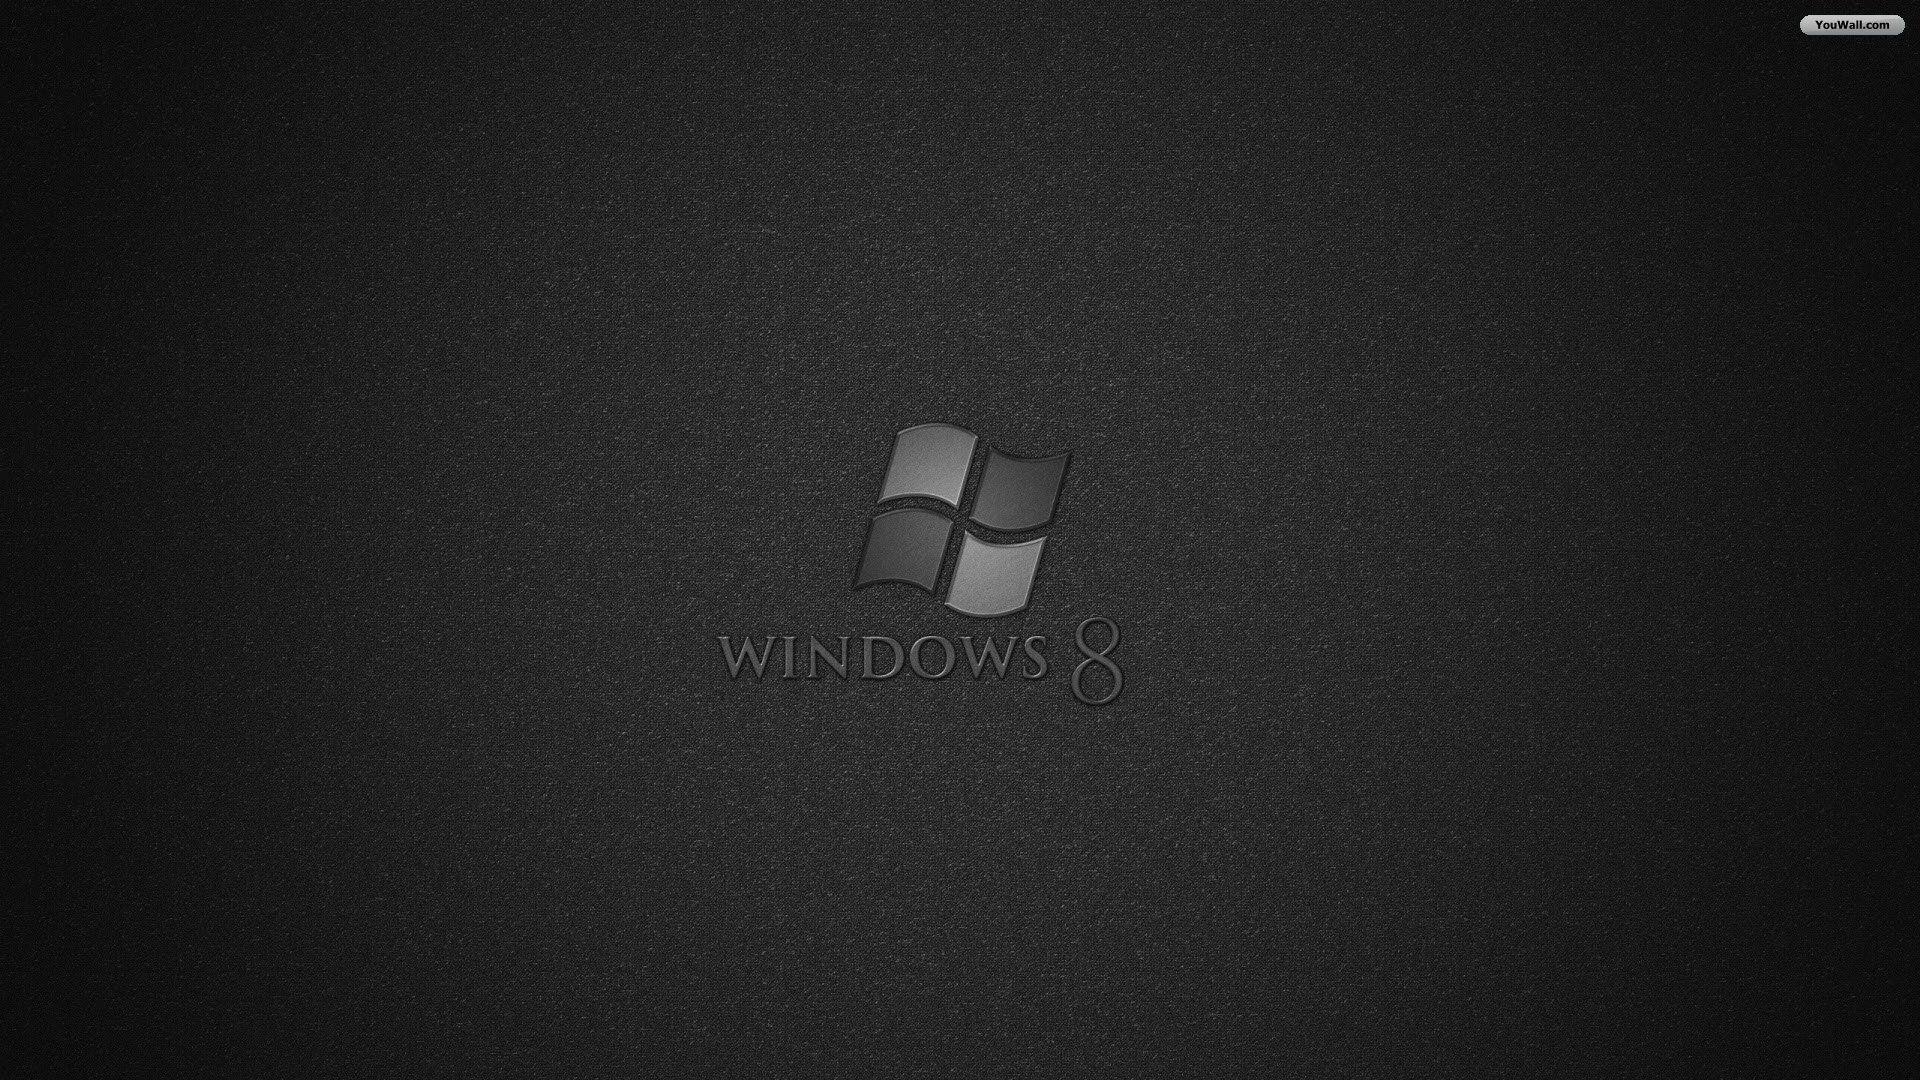 Wallpaper For > Windows 7 Wallpaper Black 1920x1080